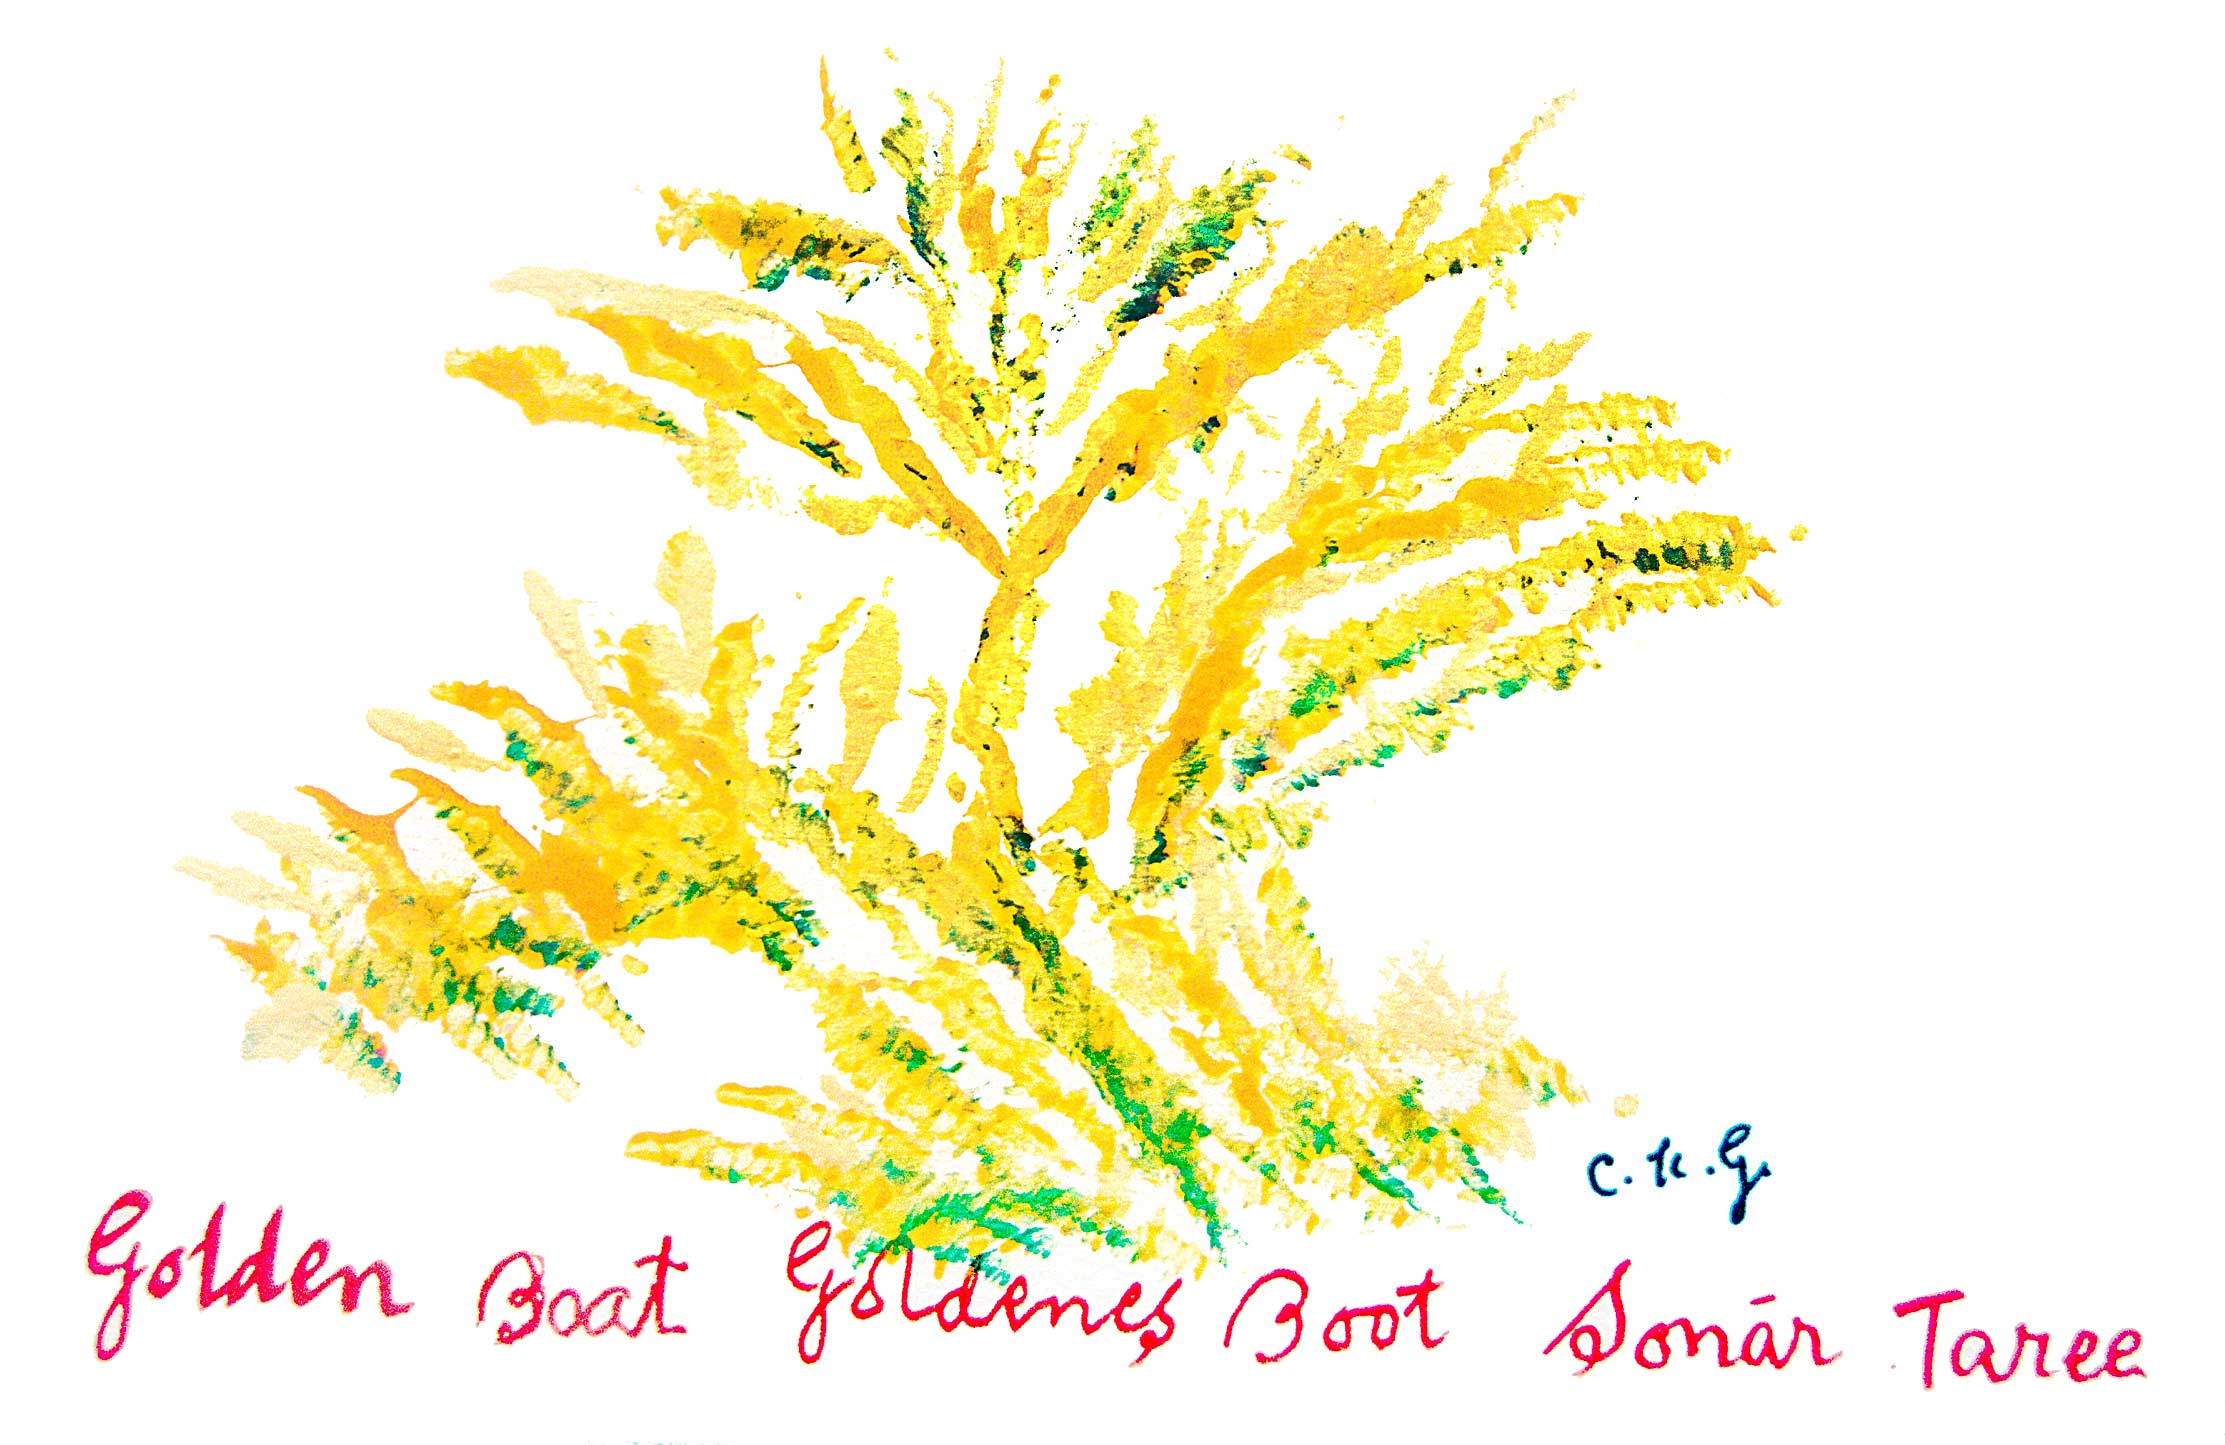 Golden-Boat_goildenes-boot-by-sri-chinmoy